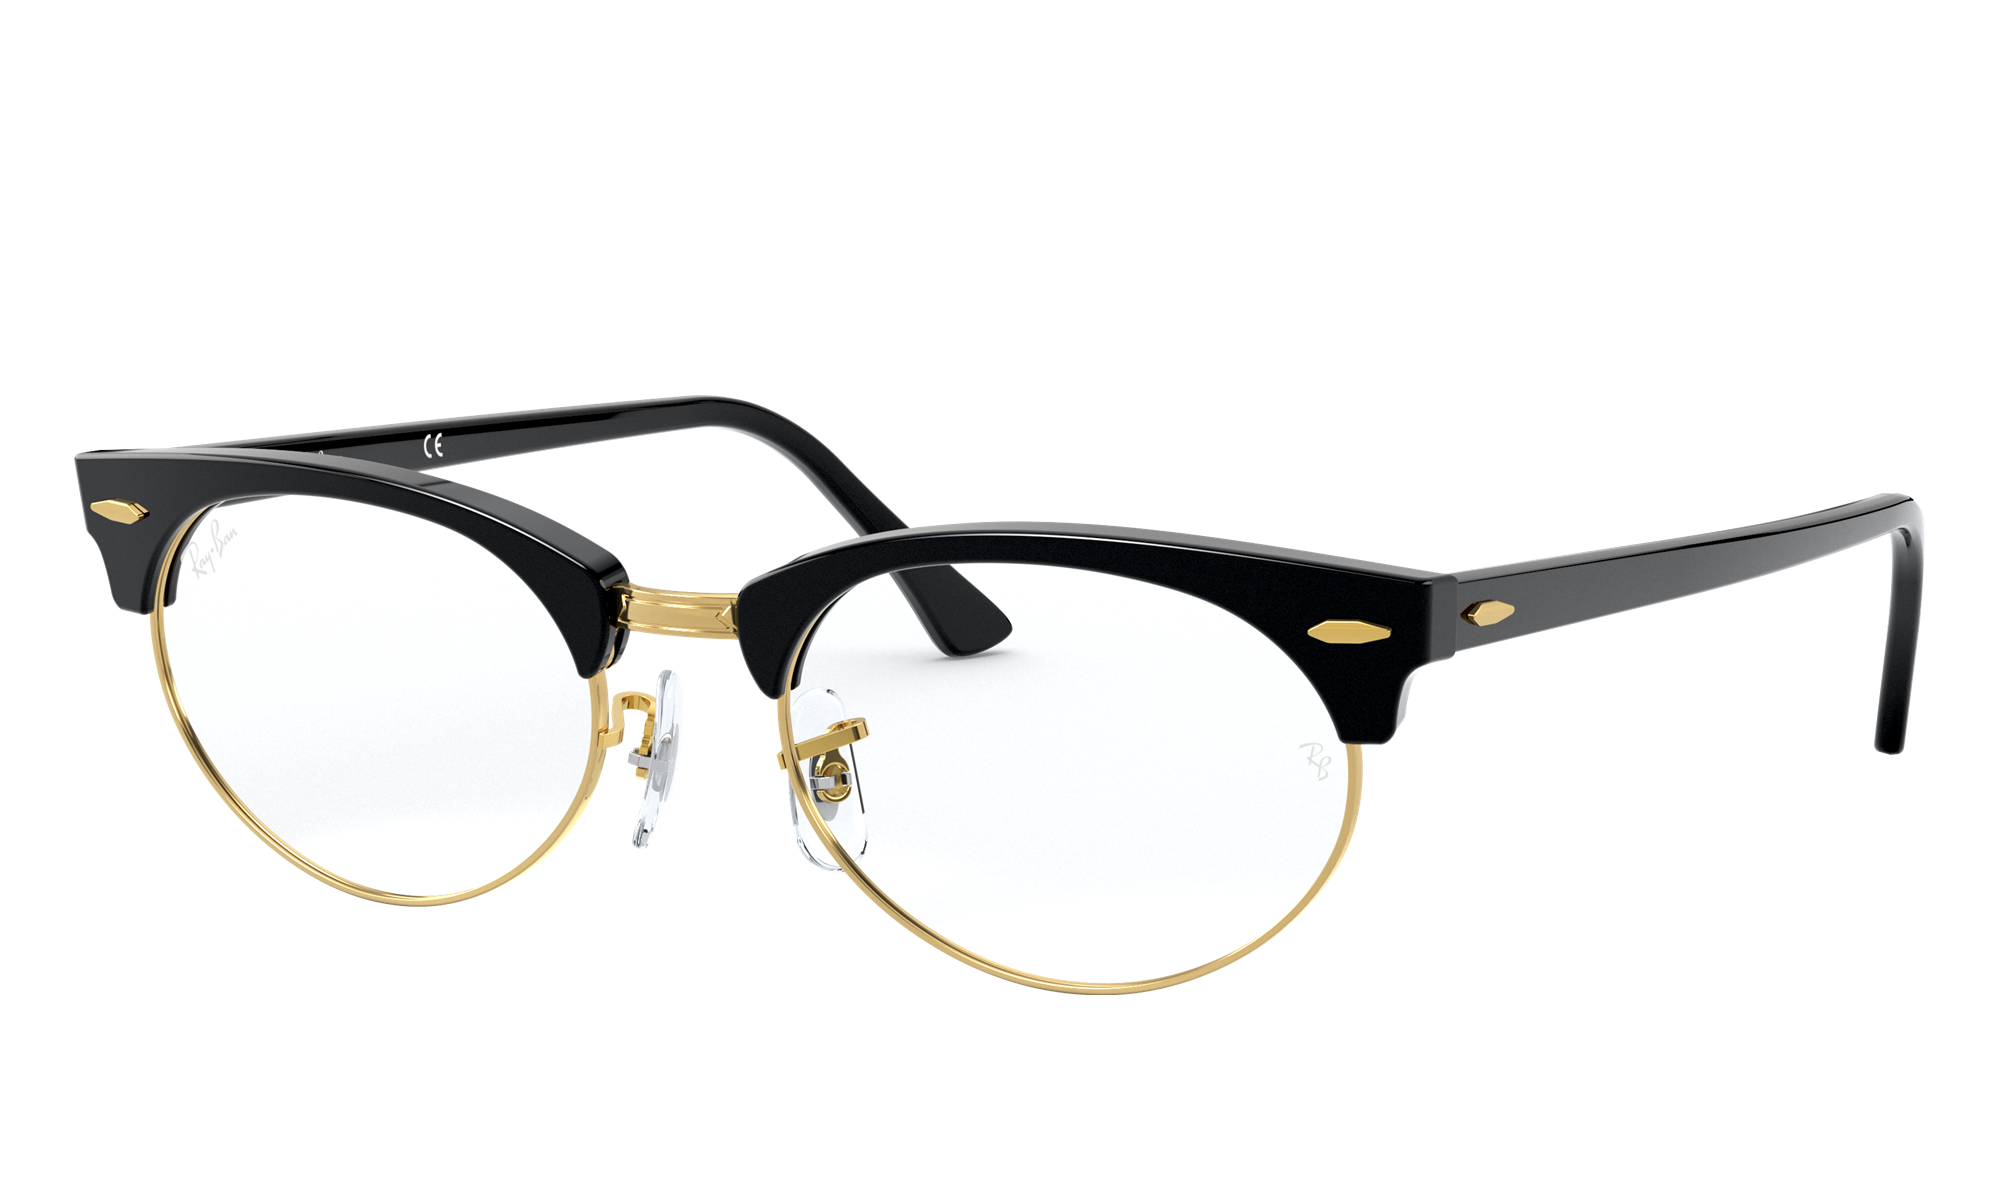 Ray-Ban CLUBMASTER OVAL OPTICS Black Eyeglasses | Glasses.com® | Free ...